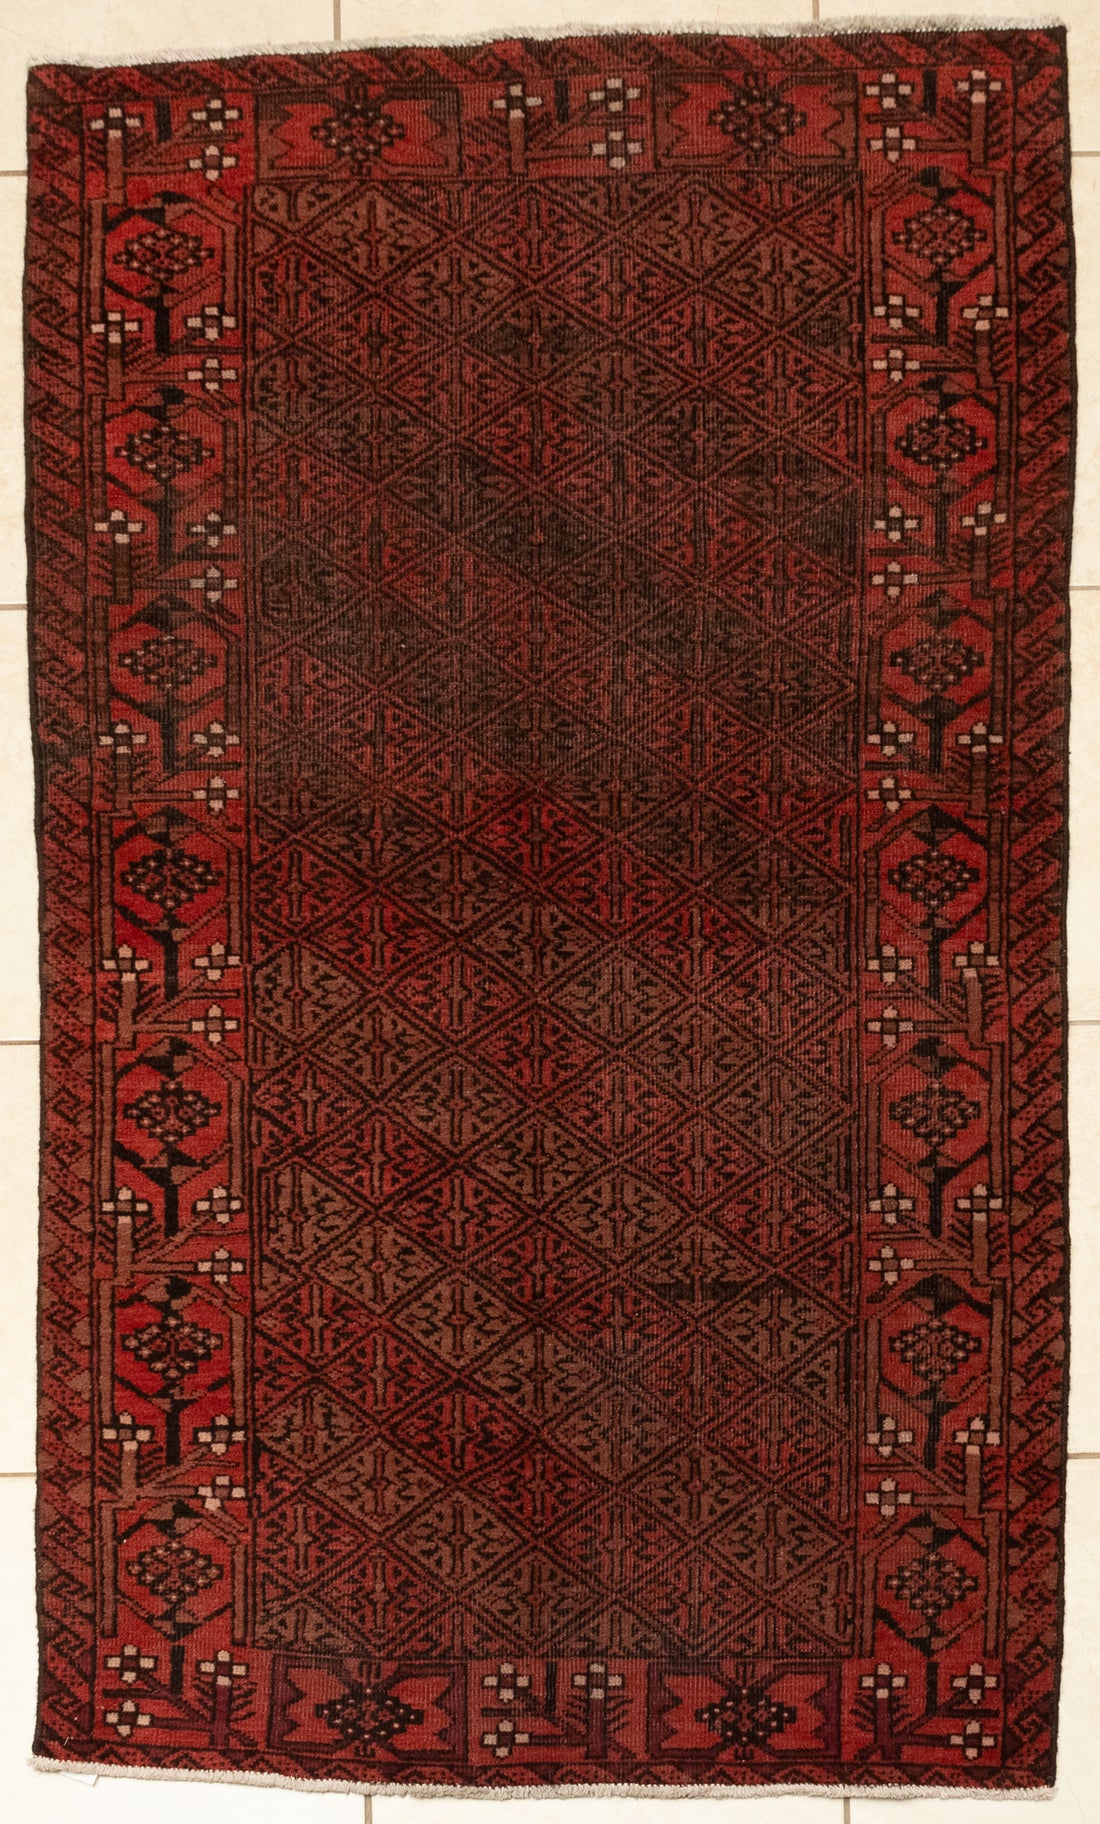 Hand-Knotted Wool Antique Turkmen Rug 6' x 3'3"